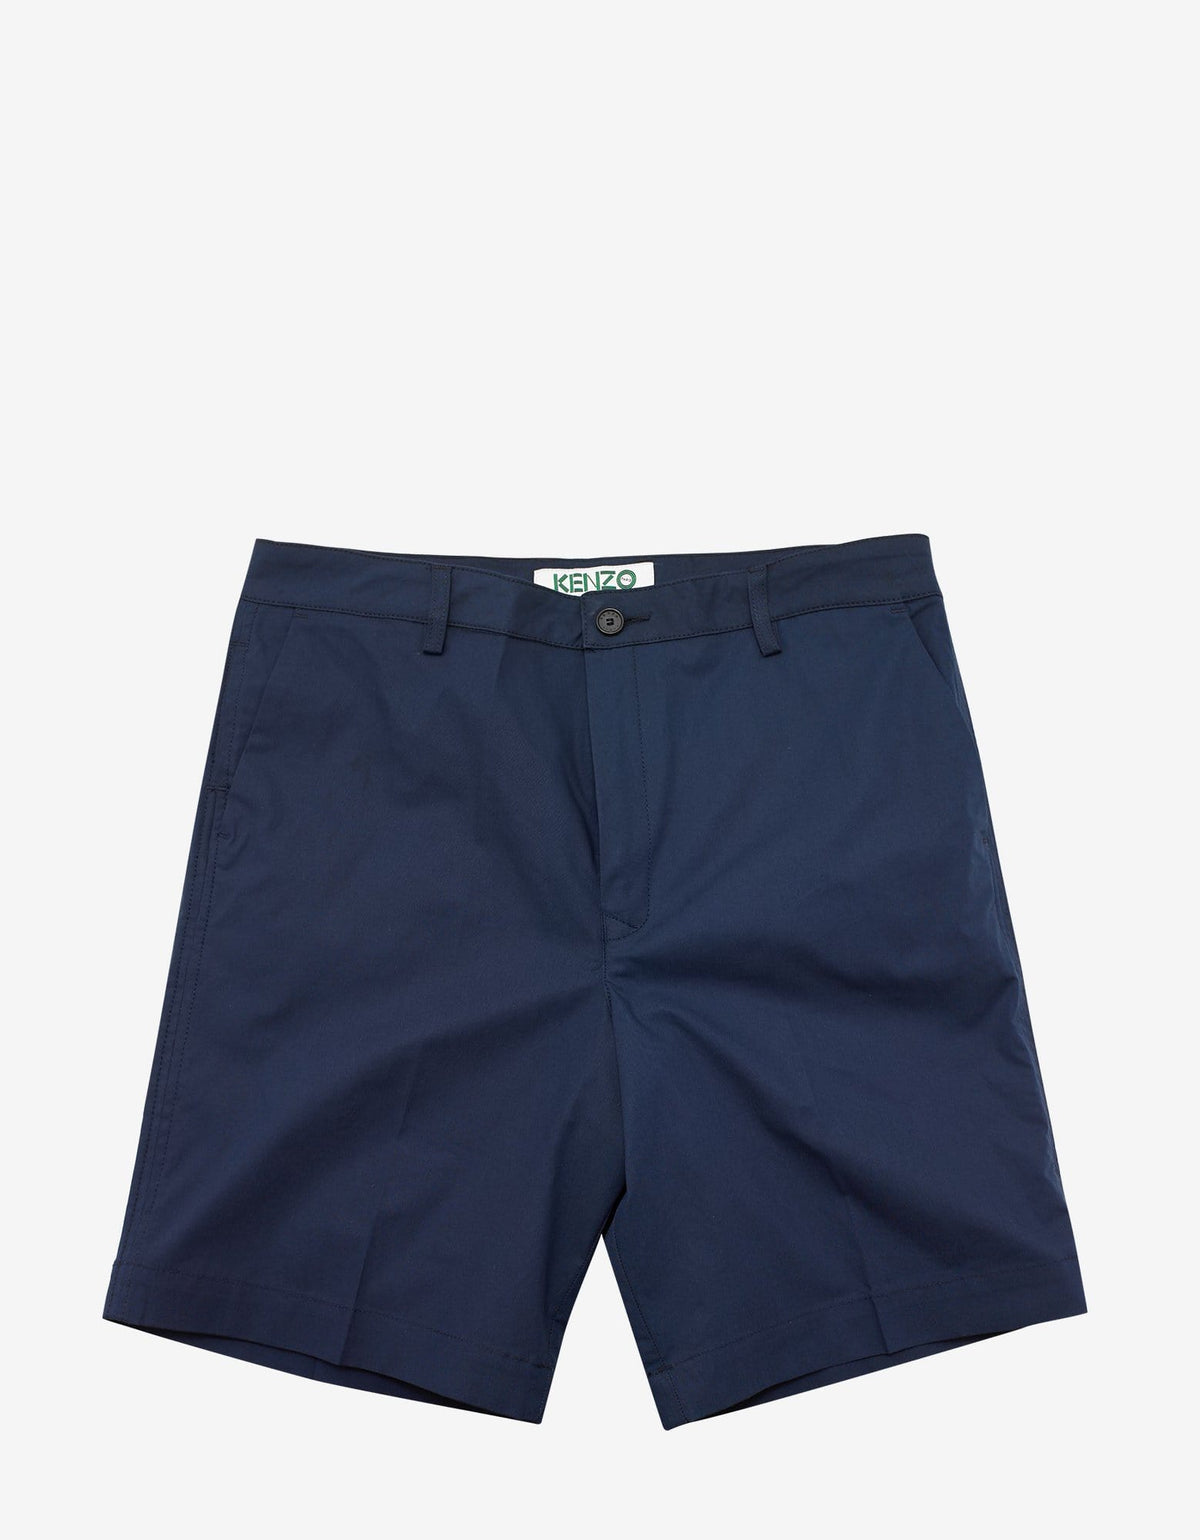 Kenzo Navy Blue Tailored Shorts